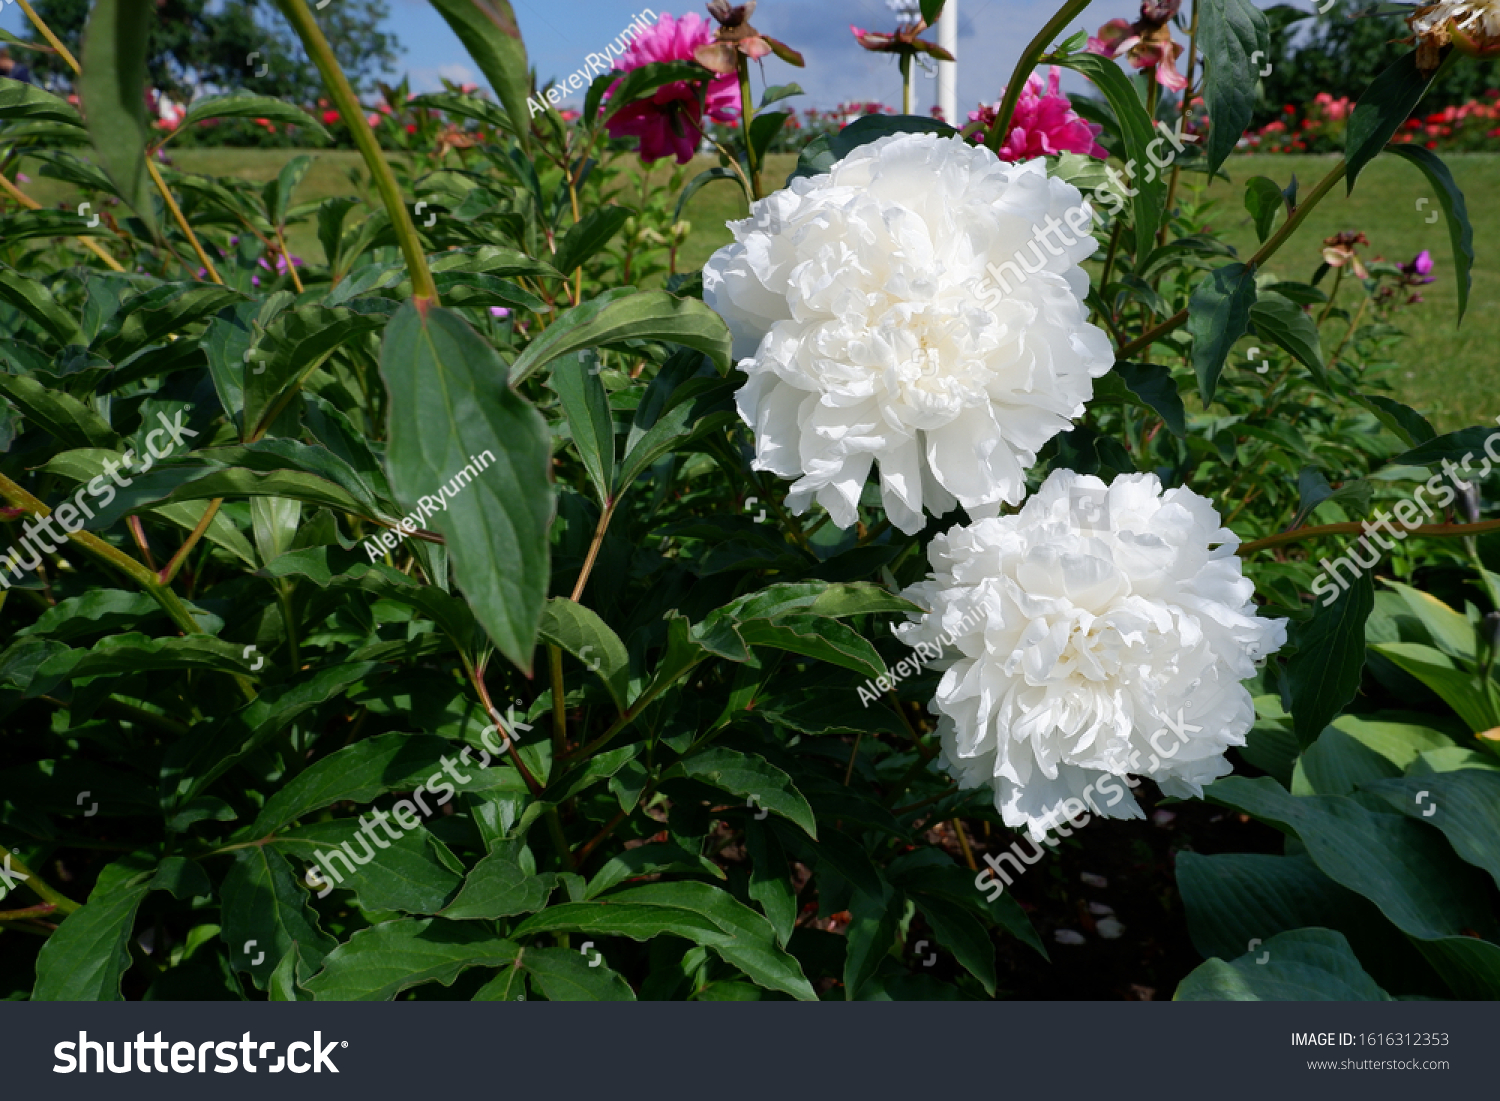 Two fresh white flowering peonies on a bush closeup view